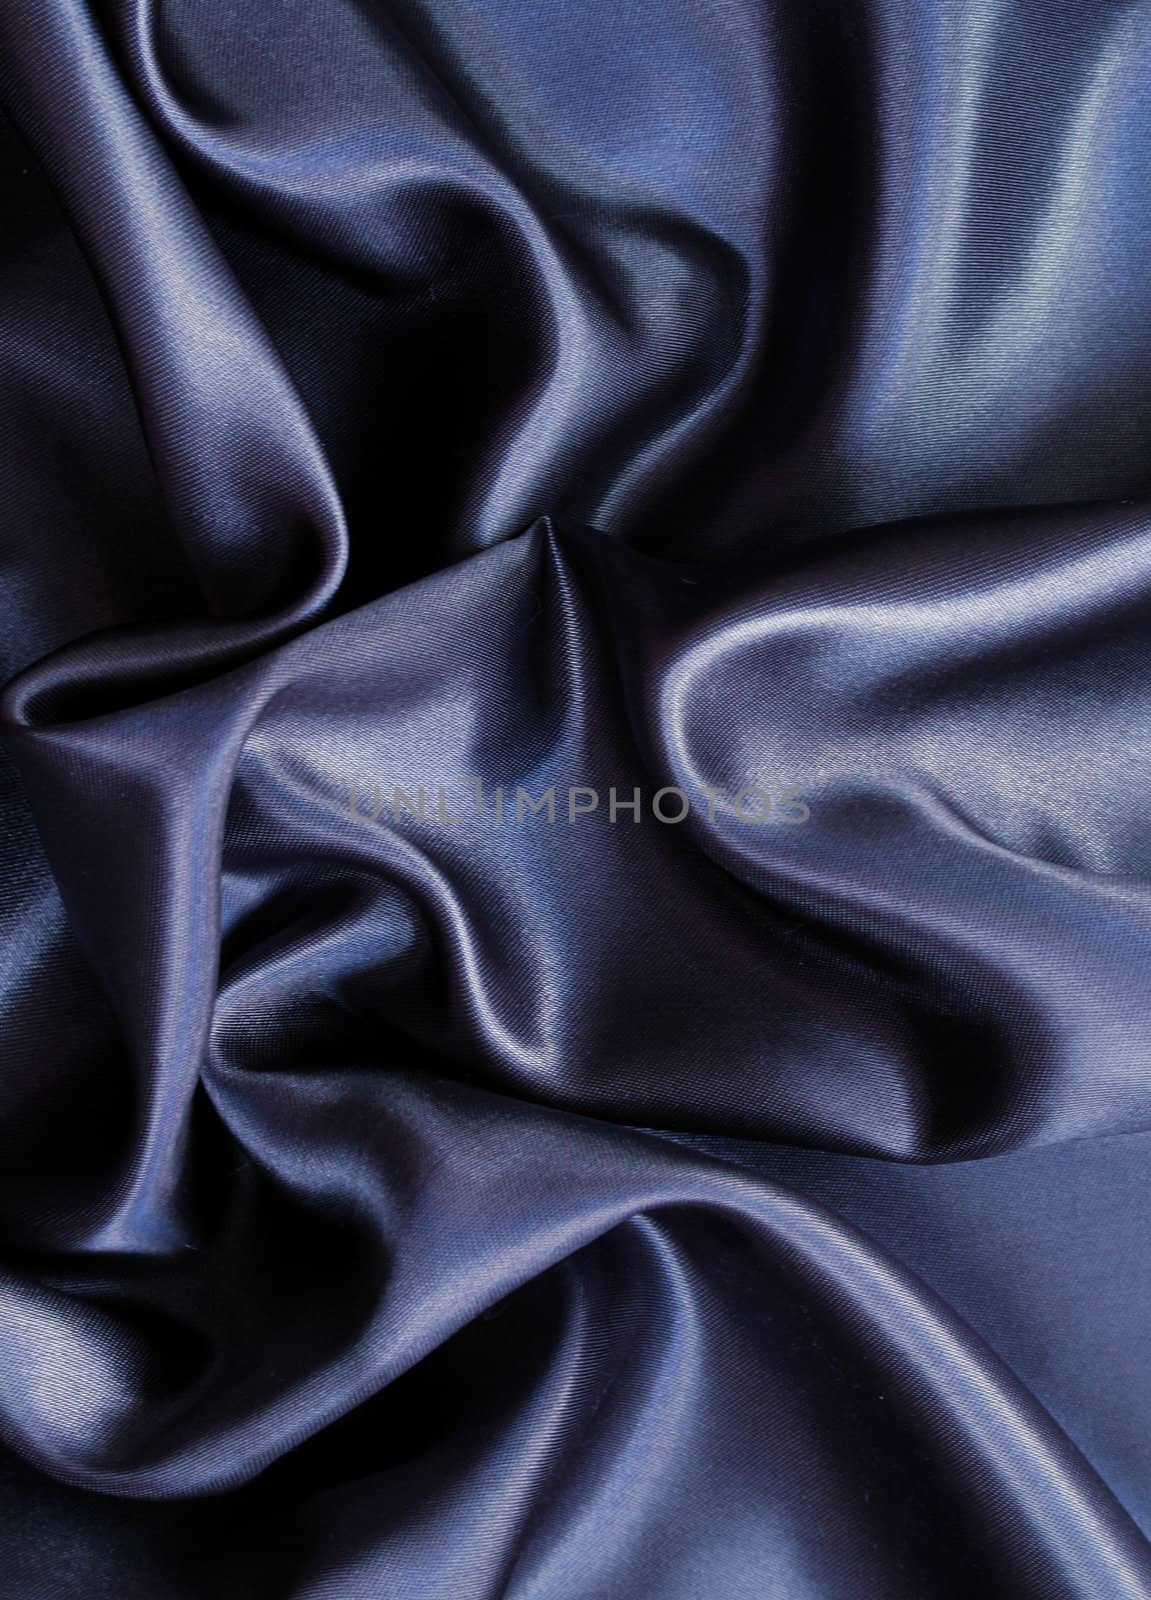 Smooth elegant black silk as background by oxanatravel